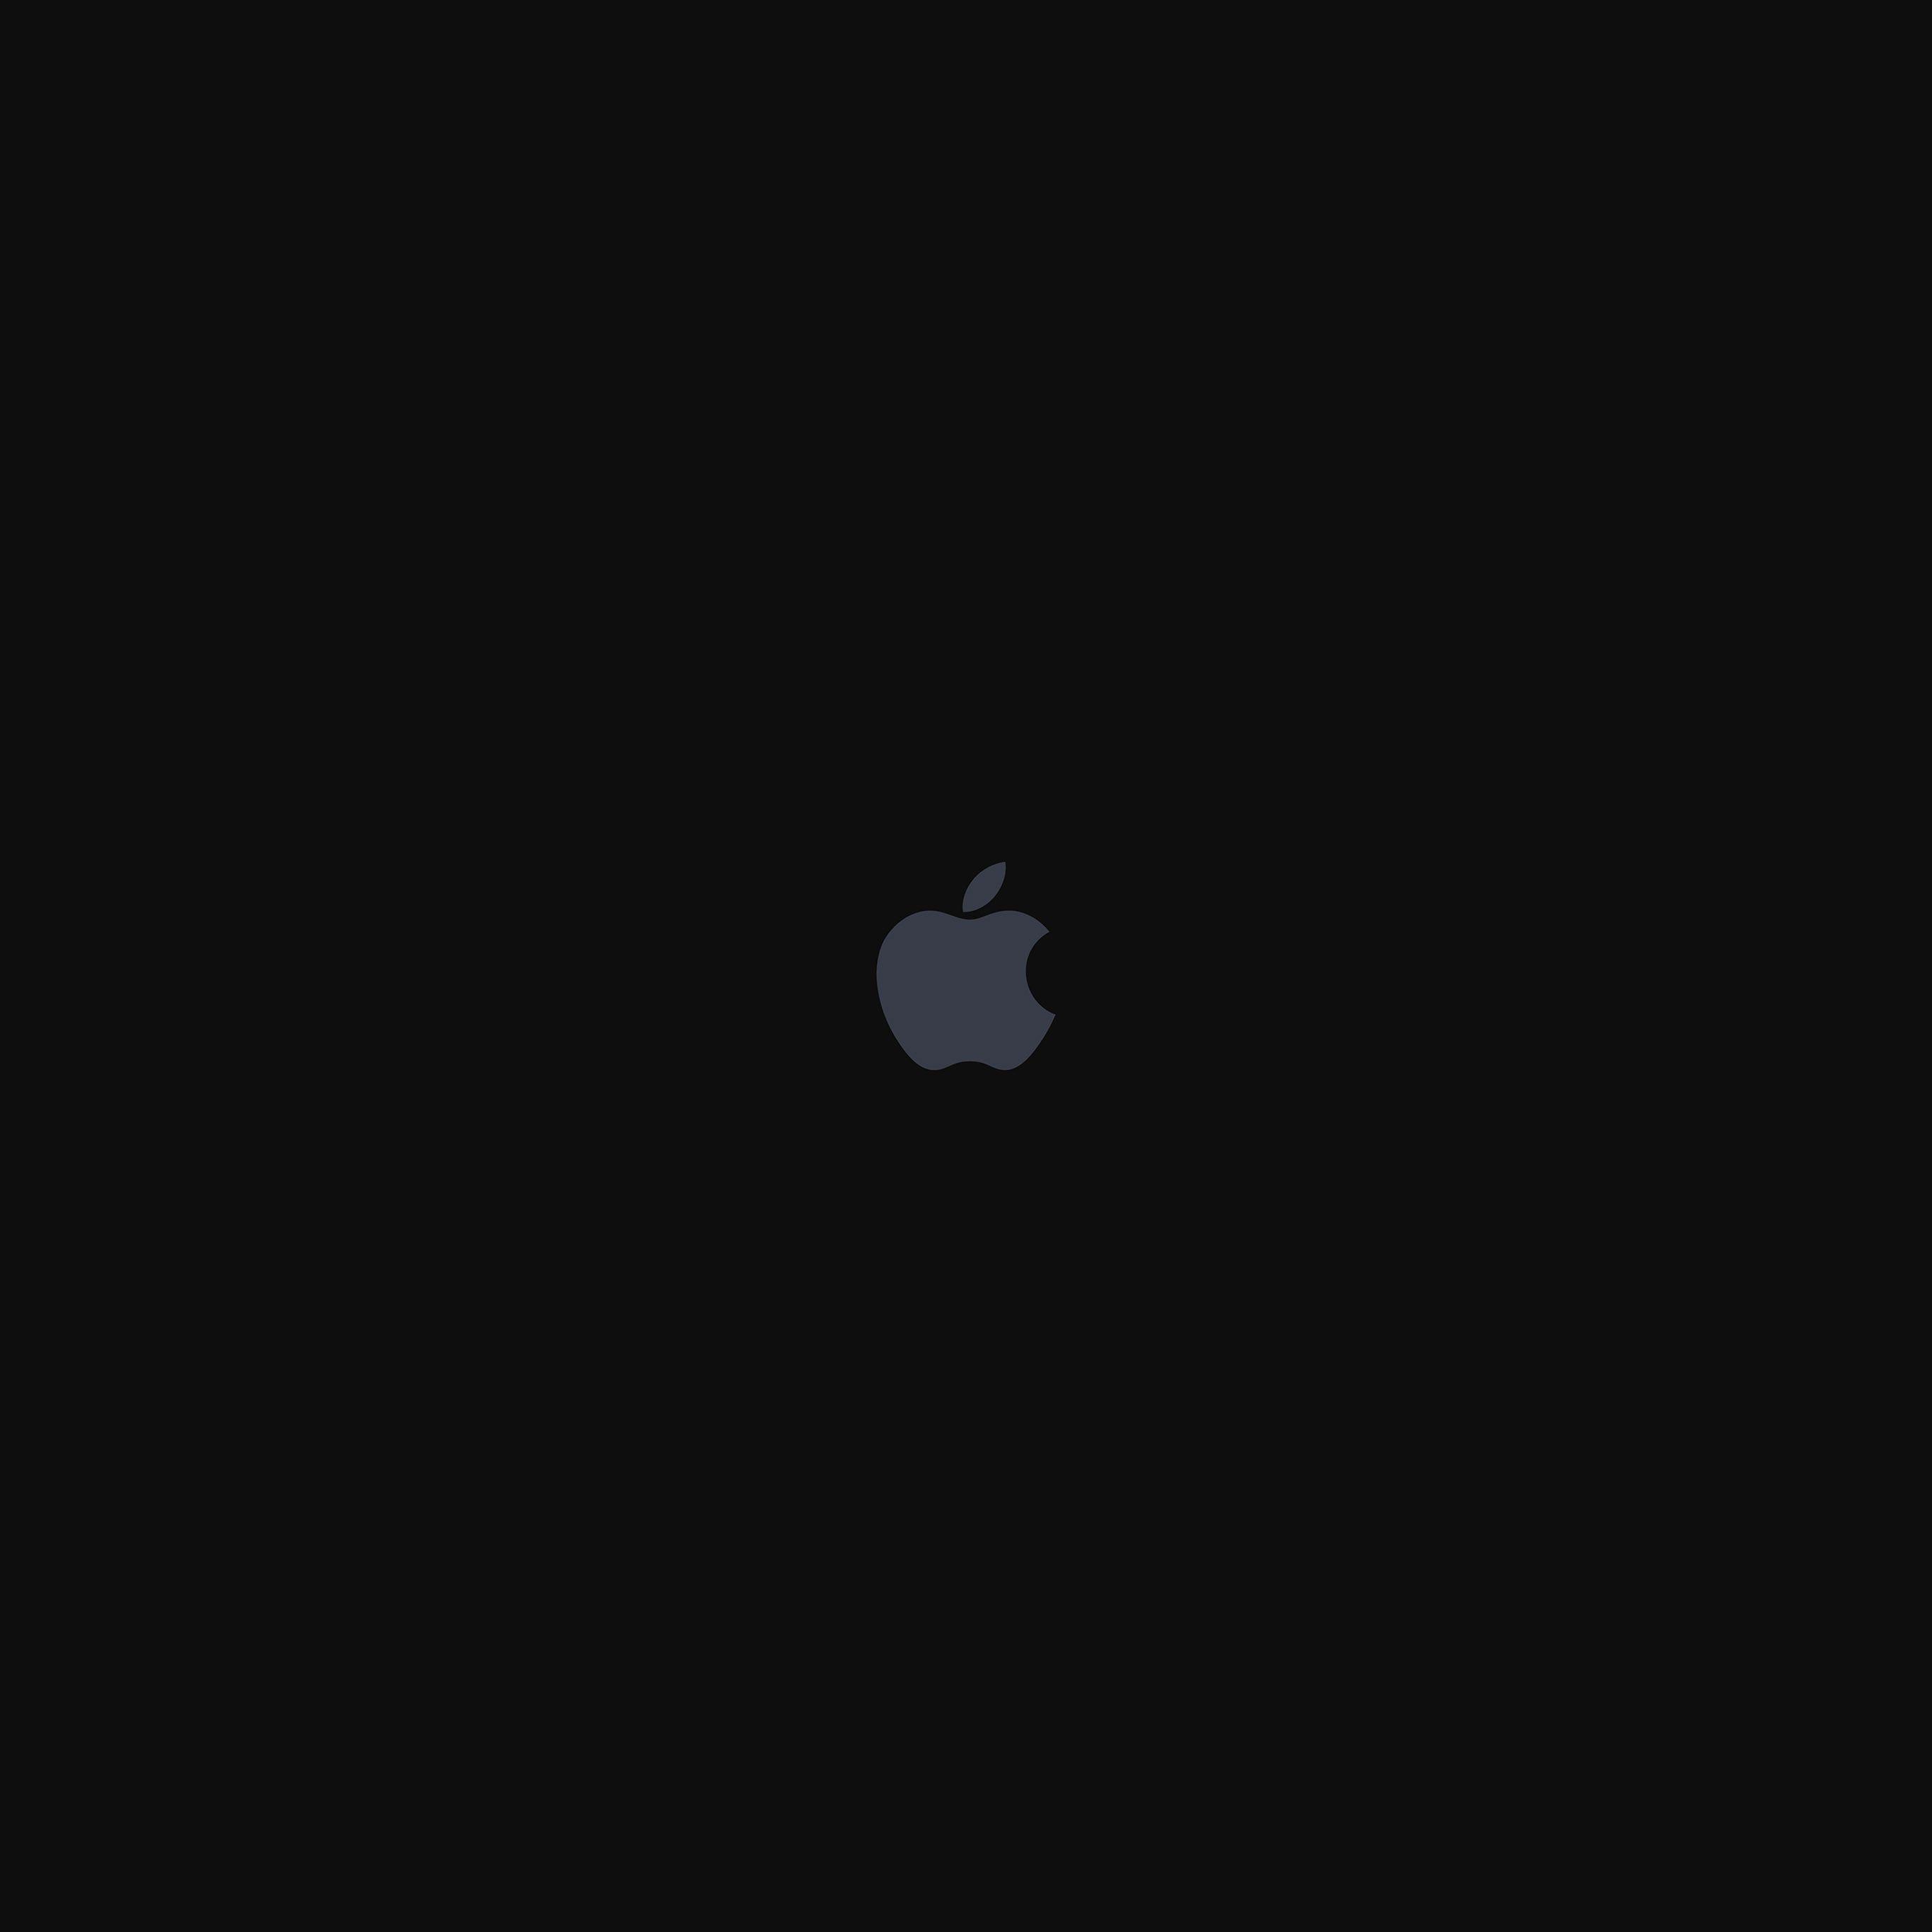 All Black Apple Logo - Iphone7 Apple Logo Dark Art Illustration Wallpaper